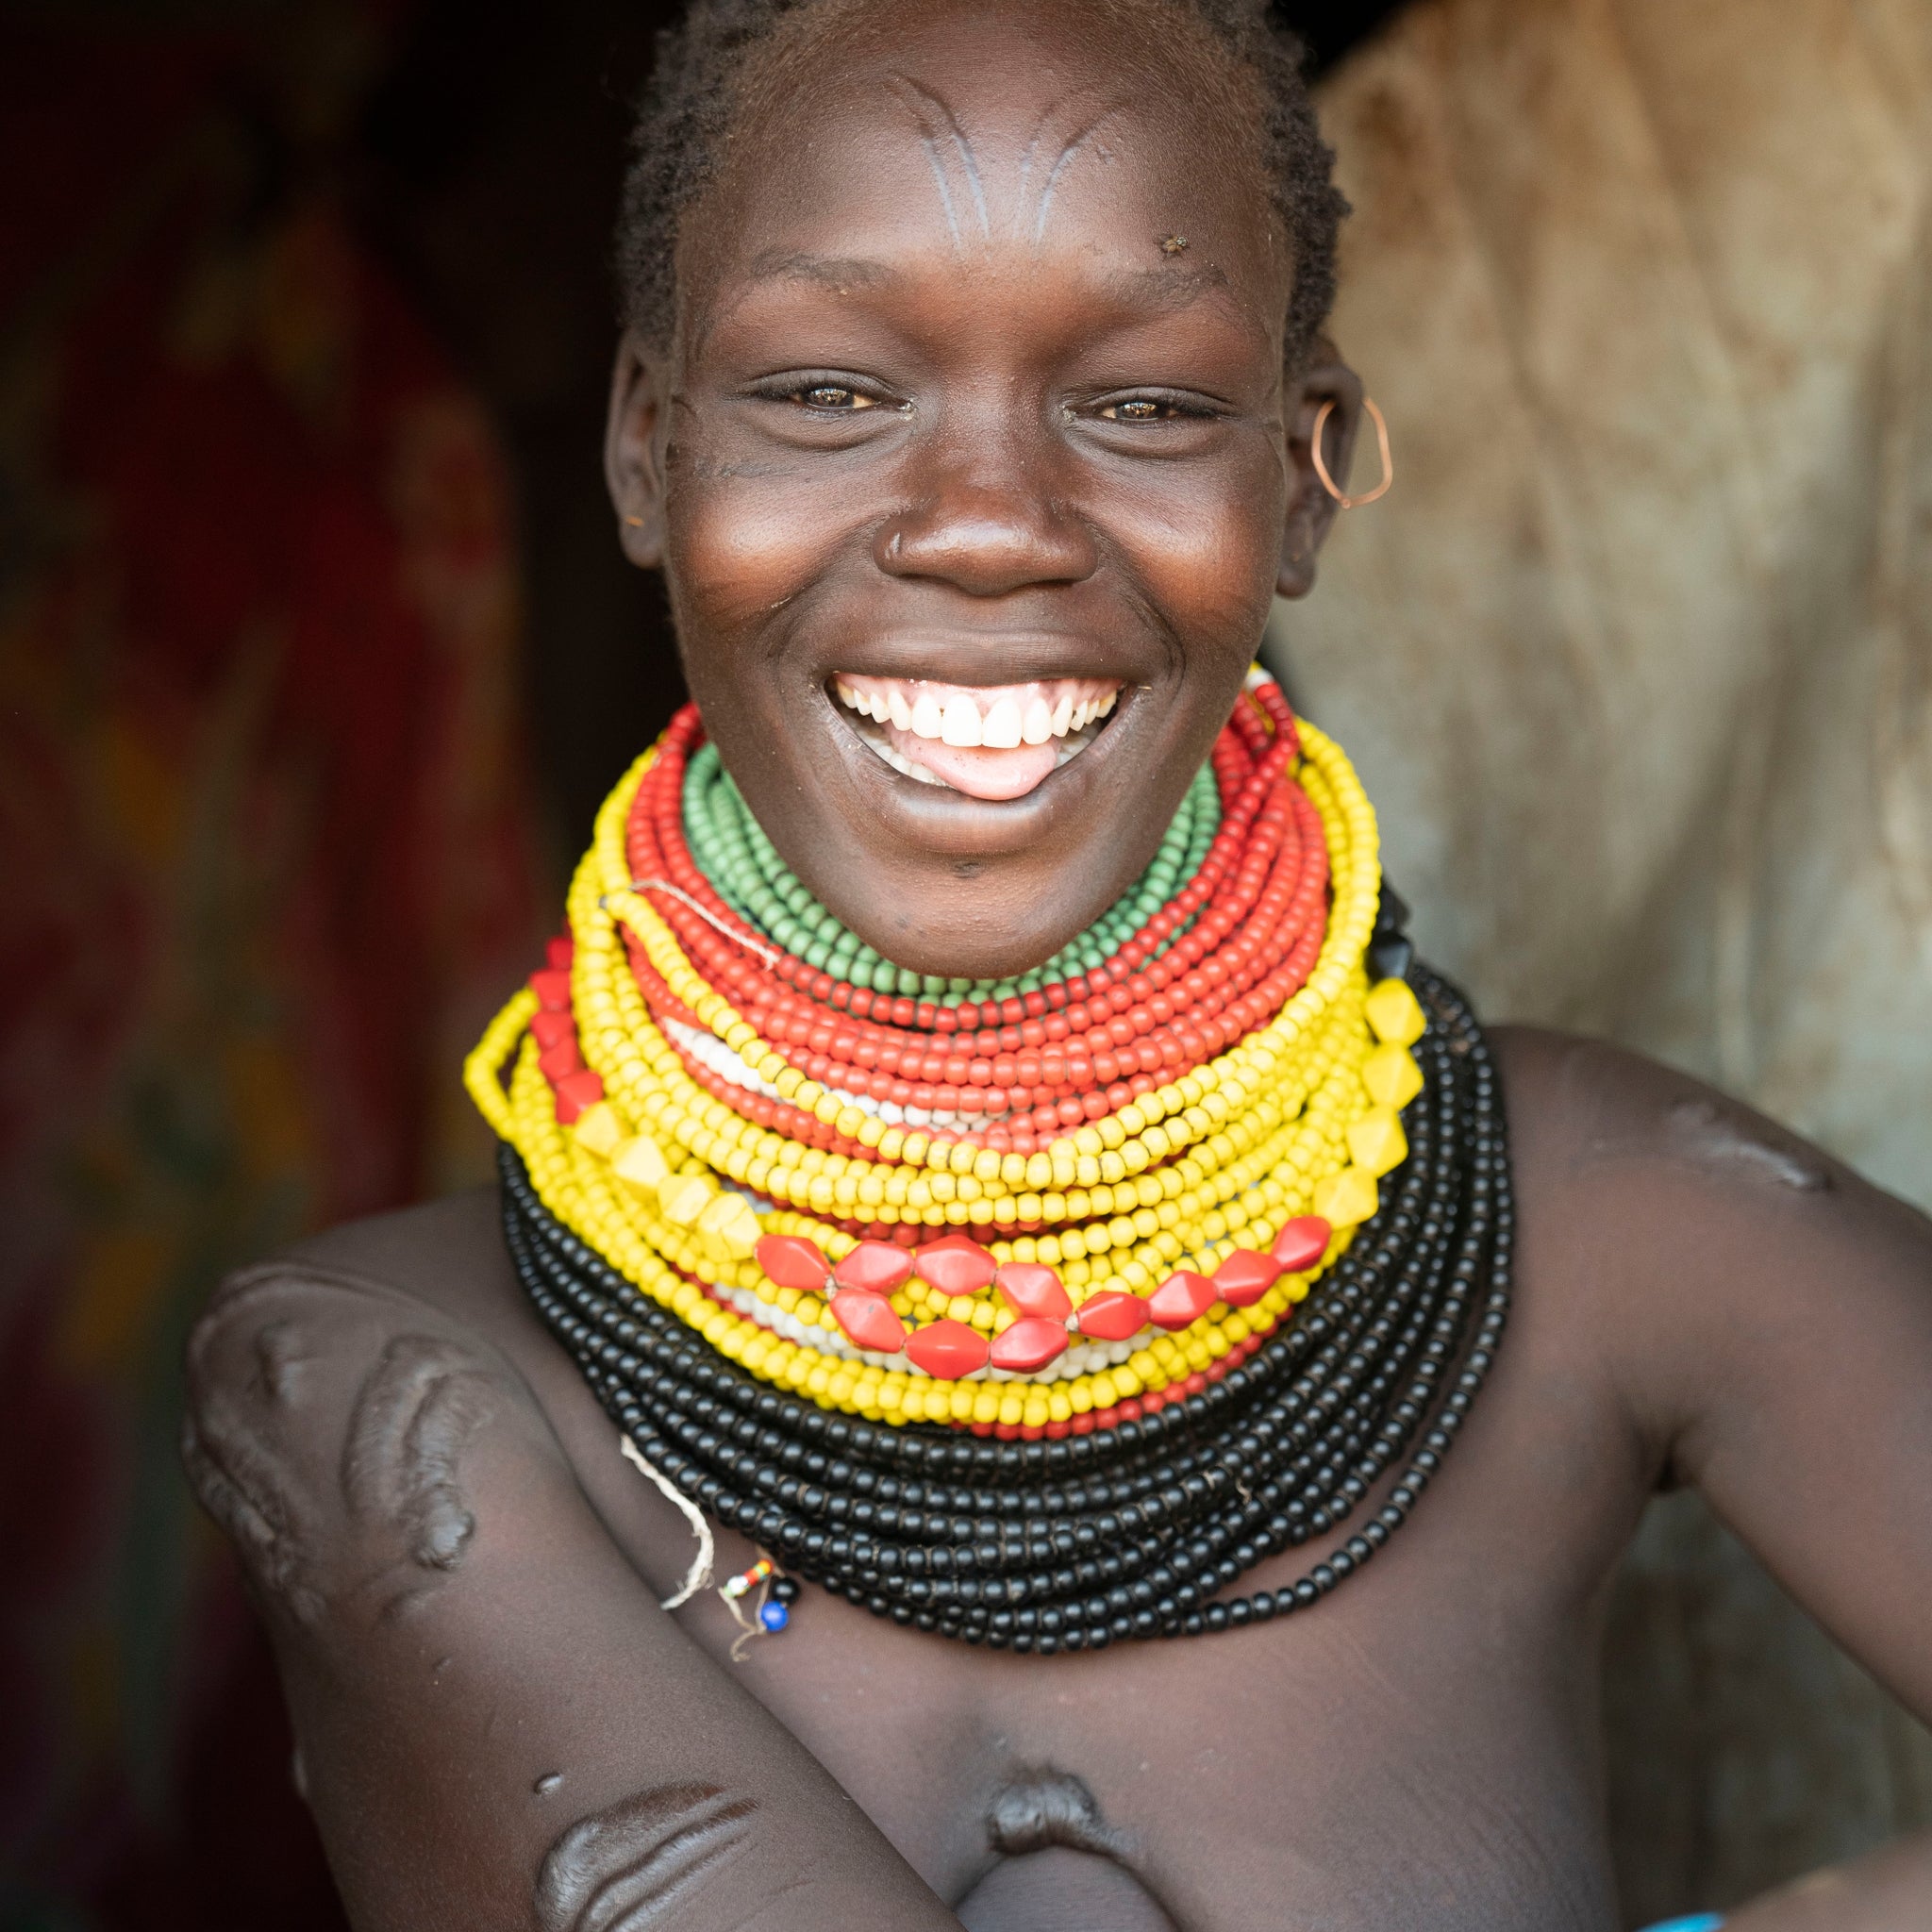 Fotografía: Sonrisas con collares Nyangaton